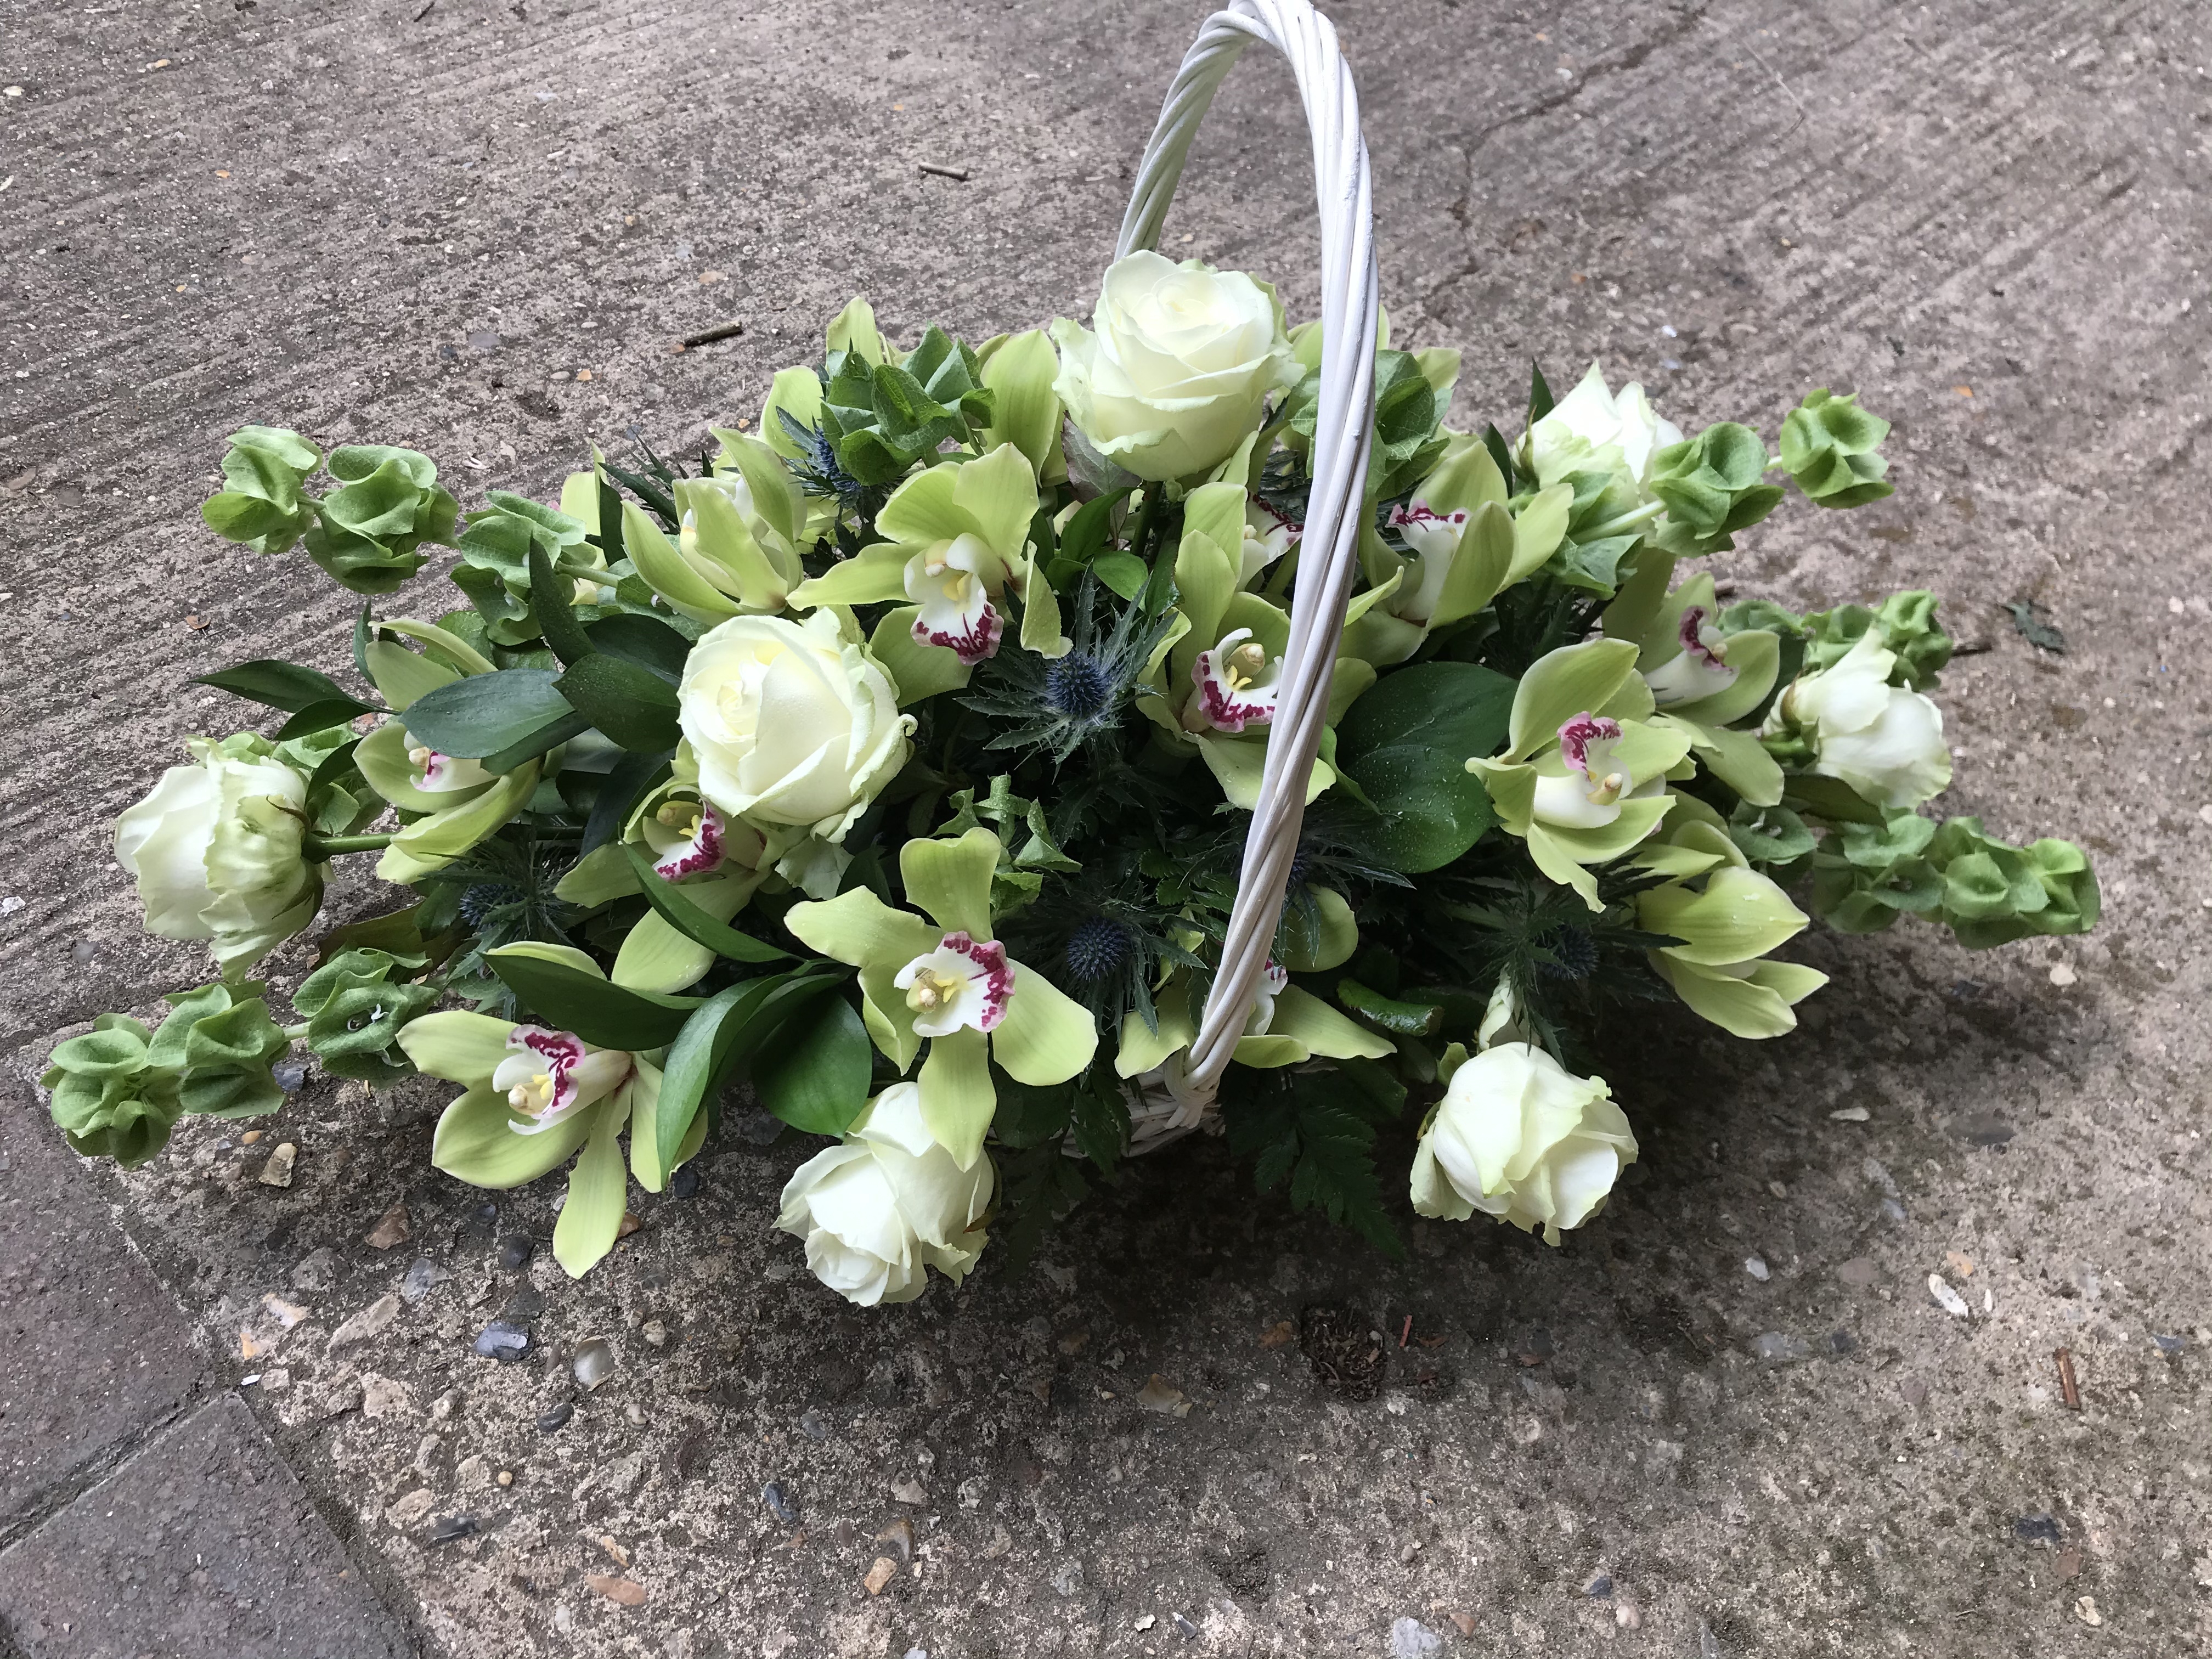 White Floral Basket